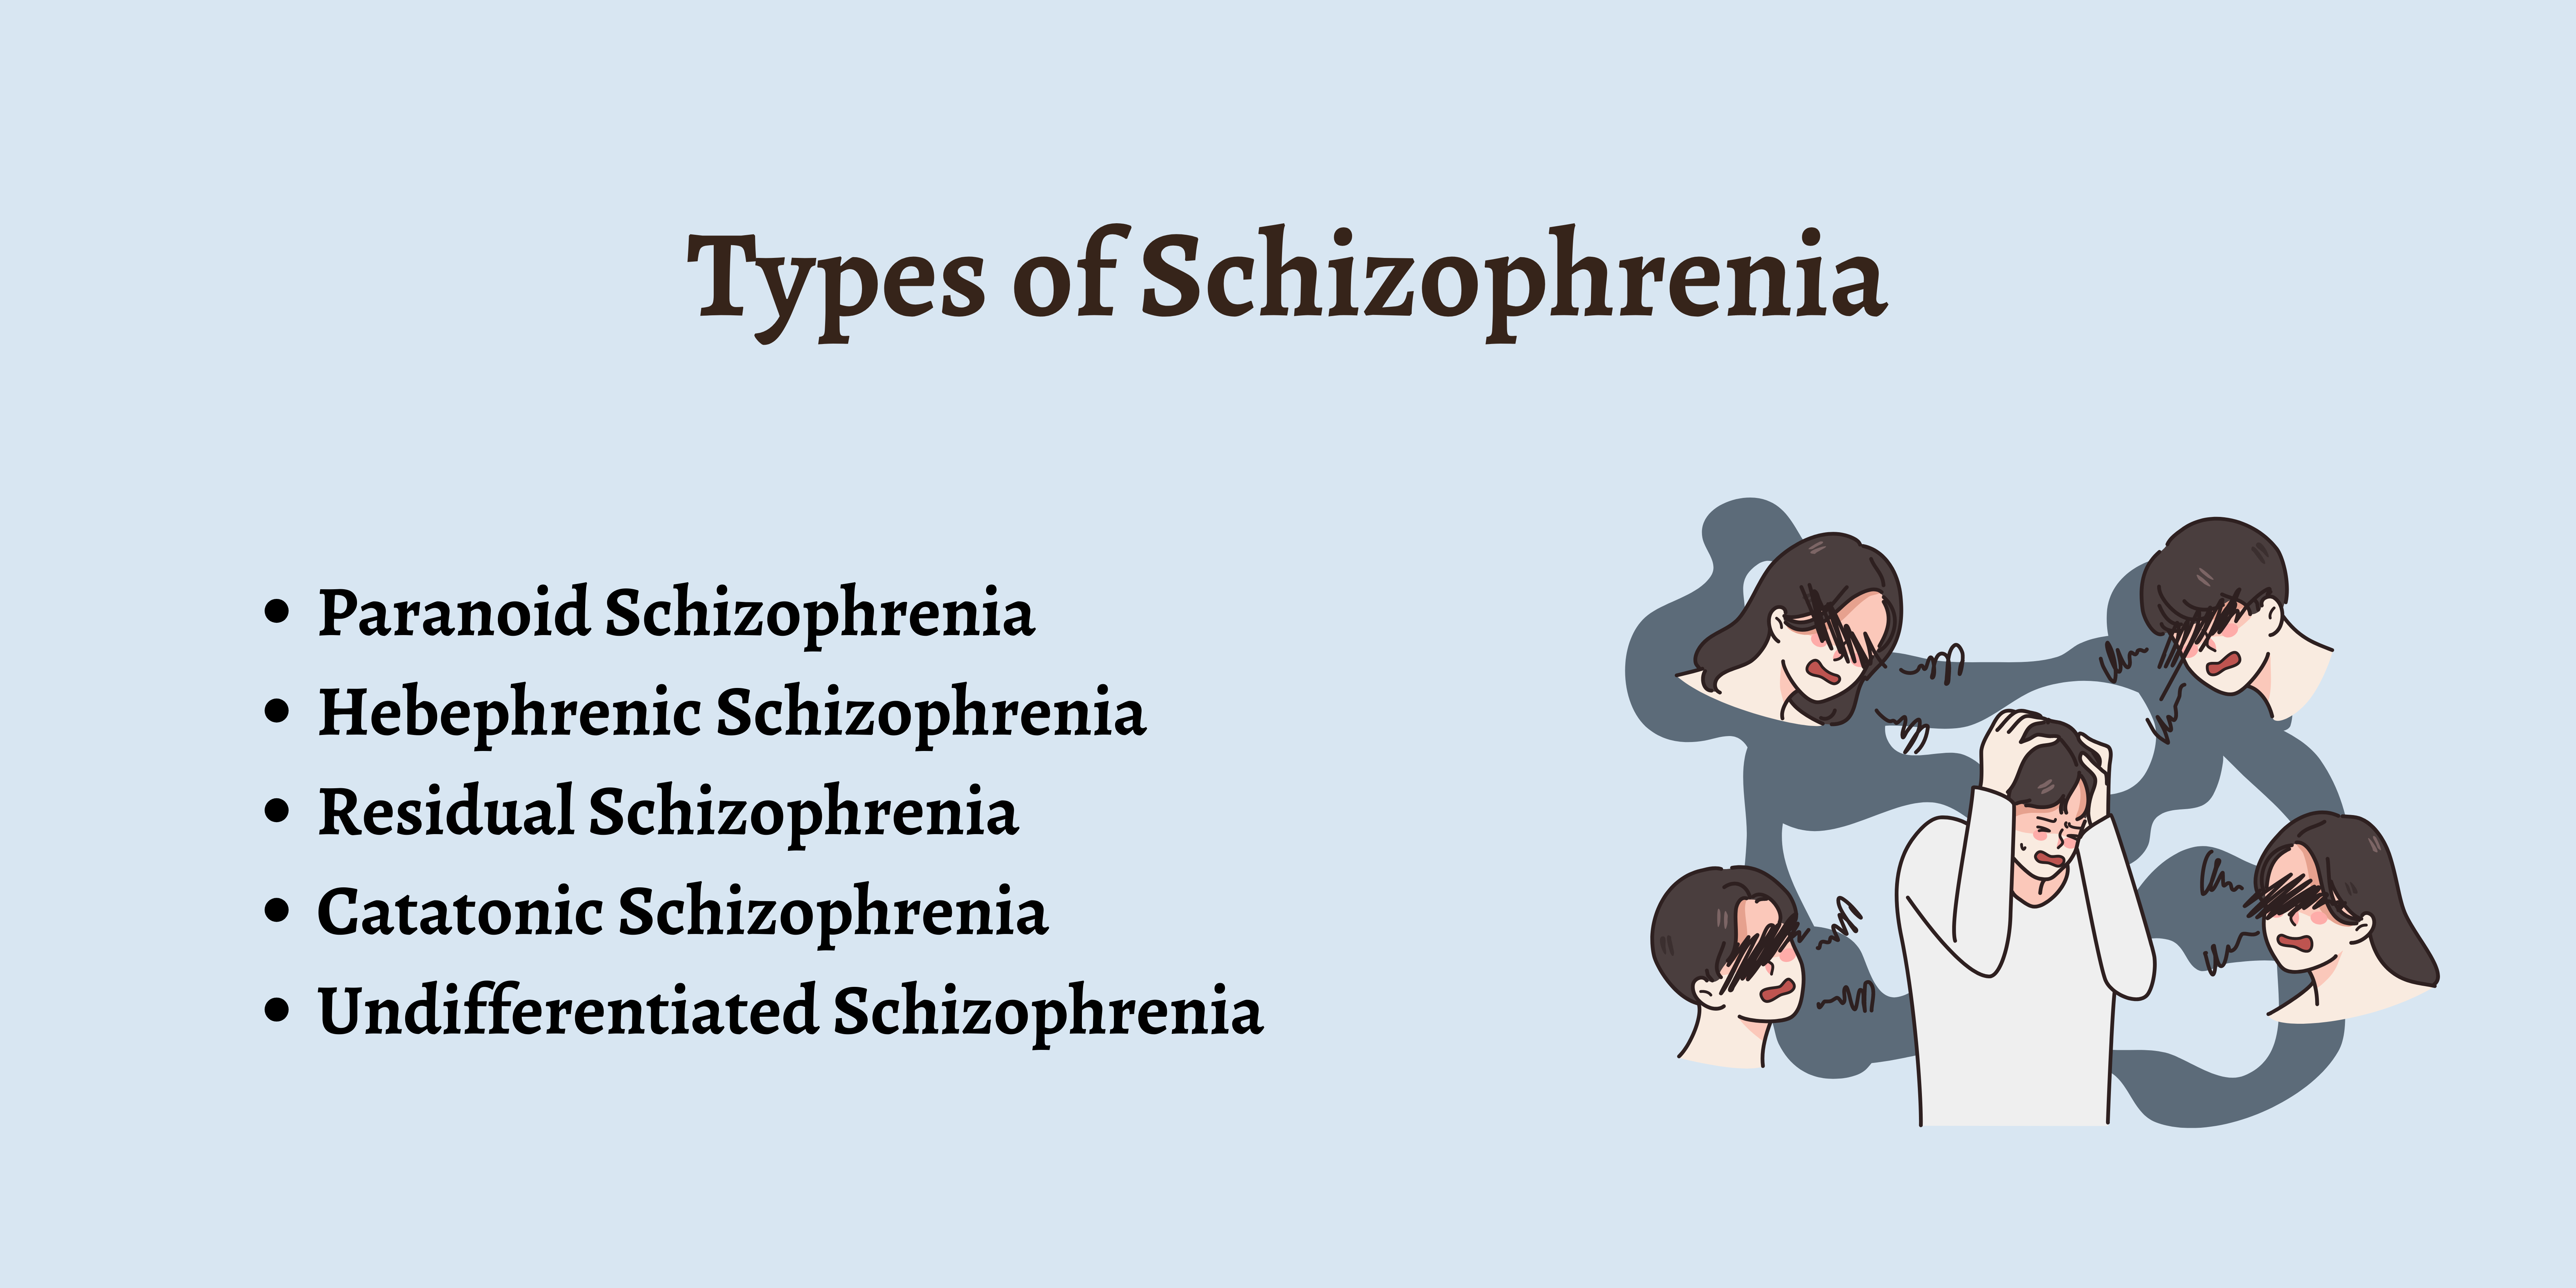 paranoid schizophrenia symptoms